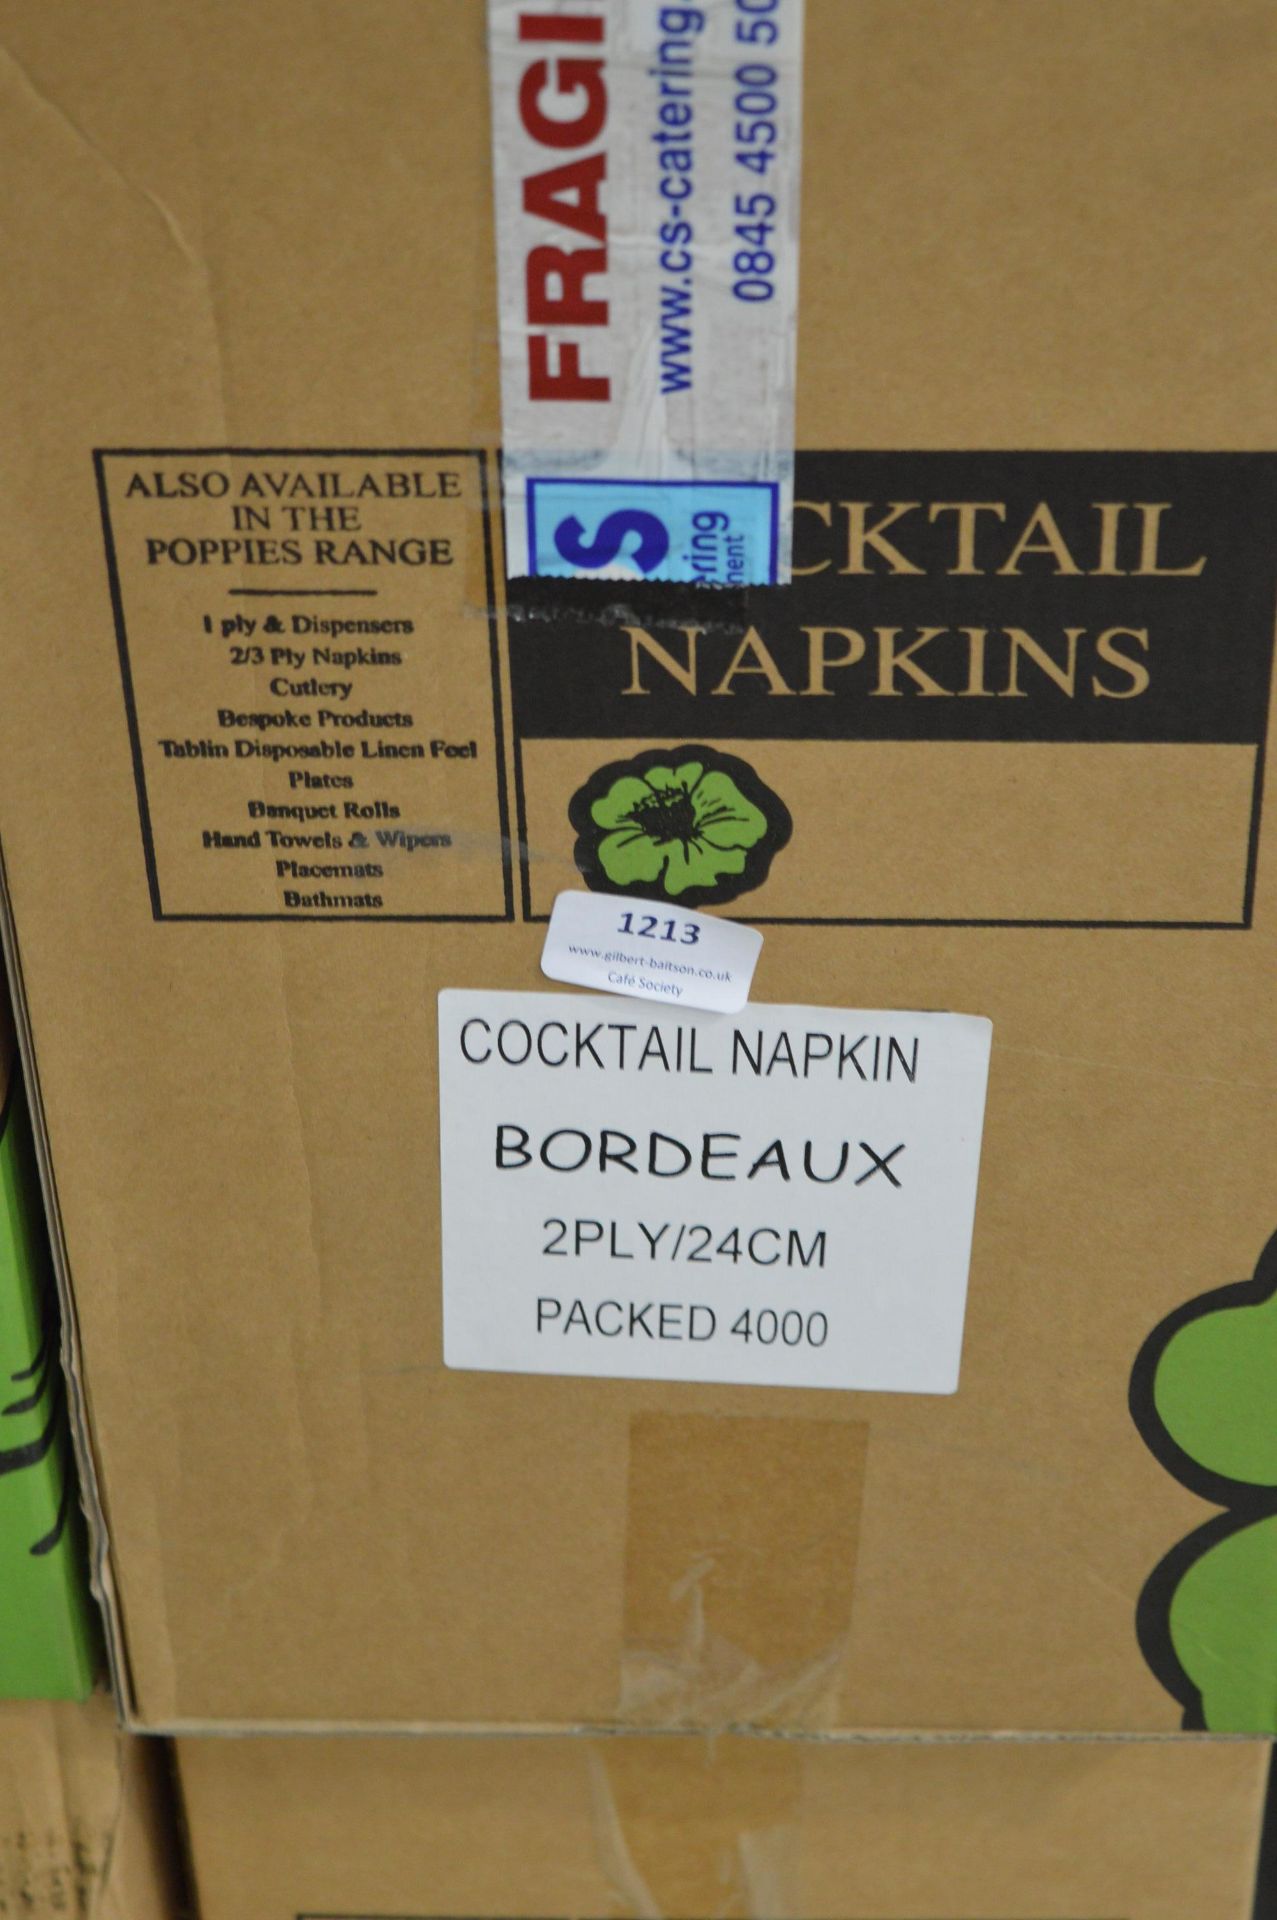 *Box of 4000 Bordeaux Cocktail Napkins 2-ply